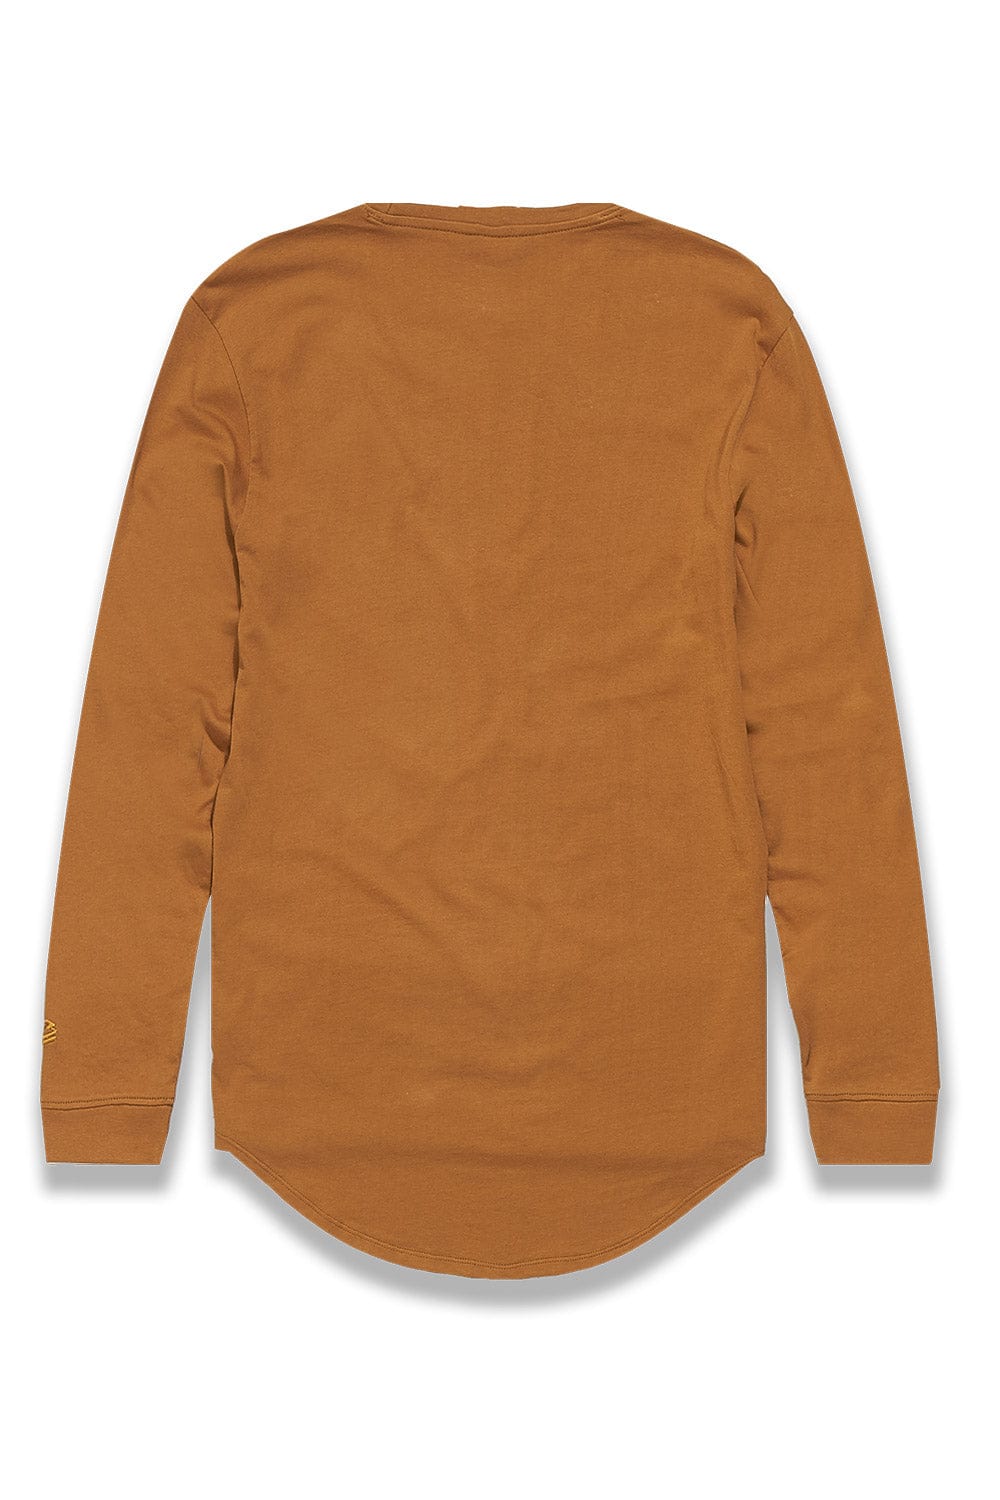 Jordan Craig Stockpile L/S T-Shirt (Cognac)